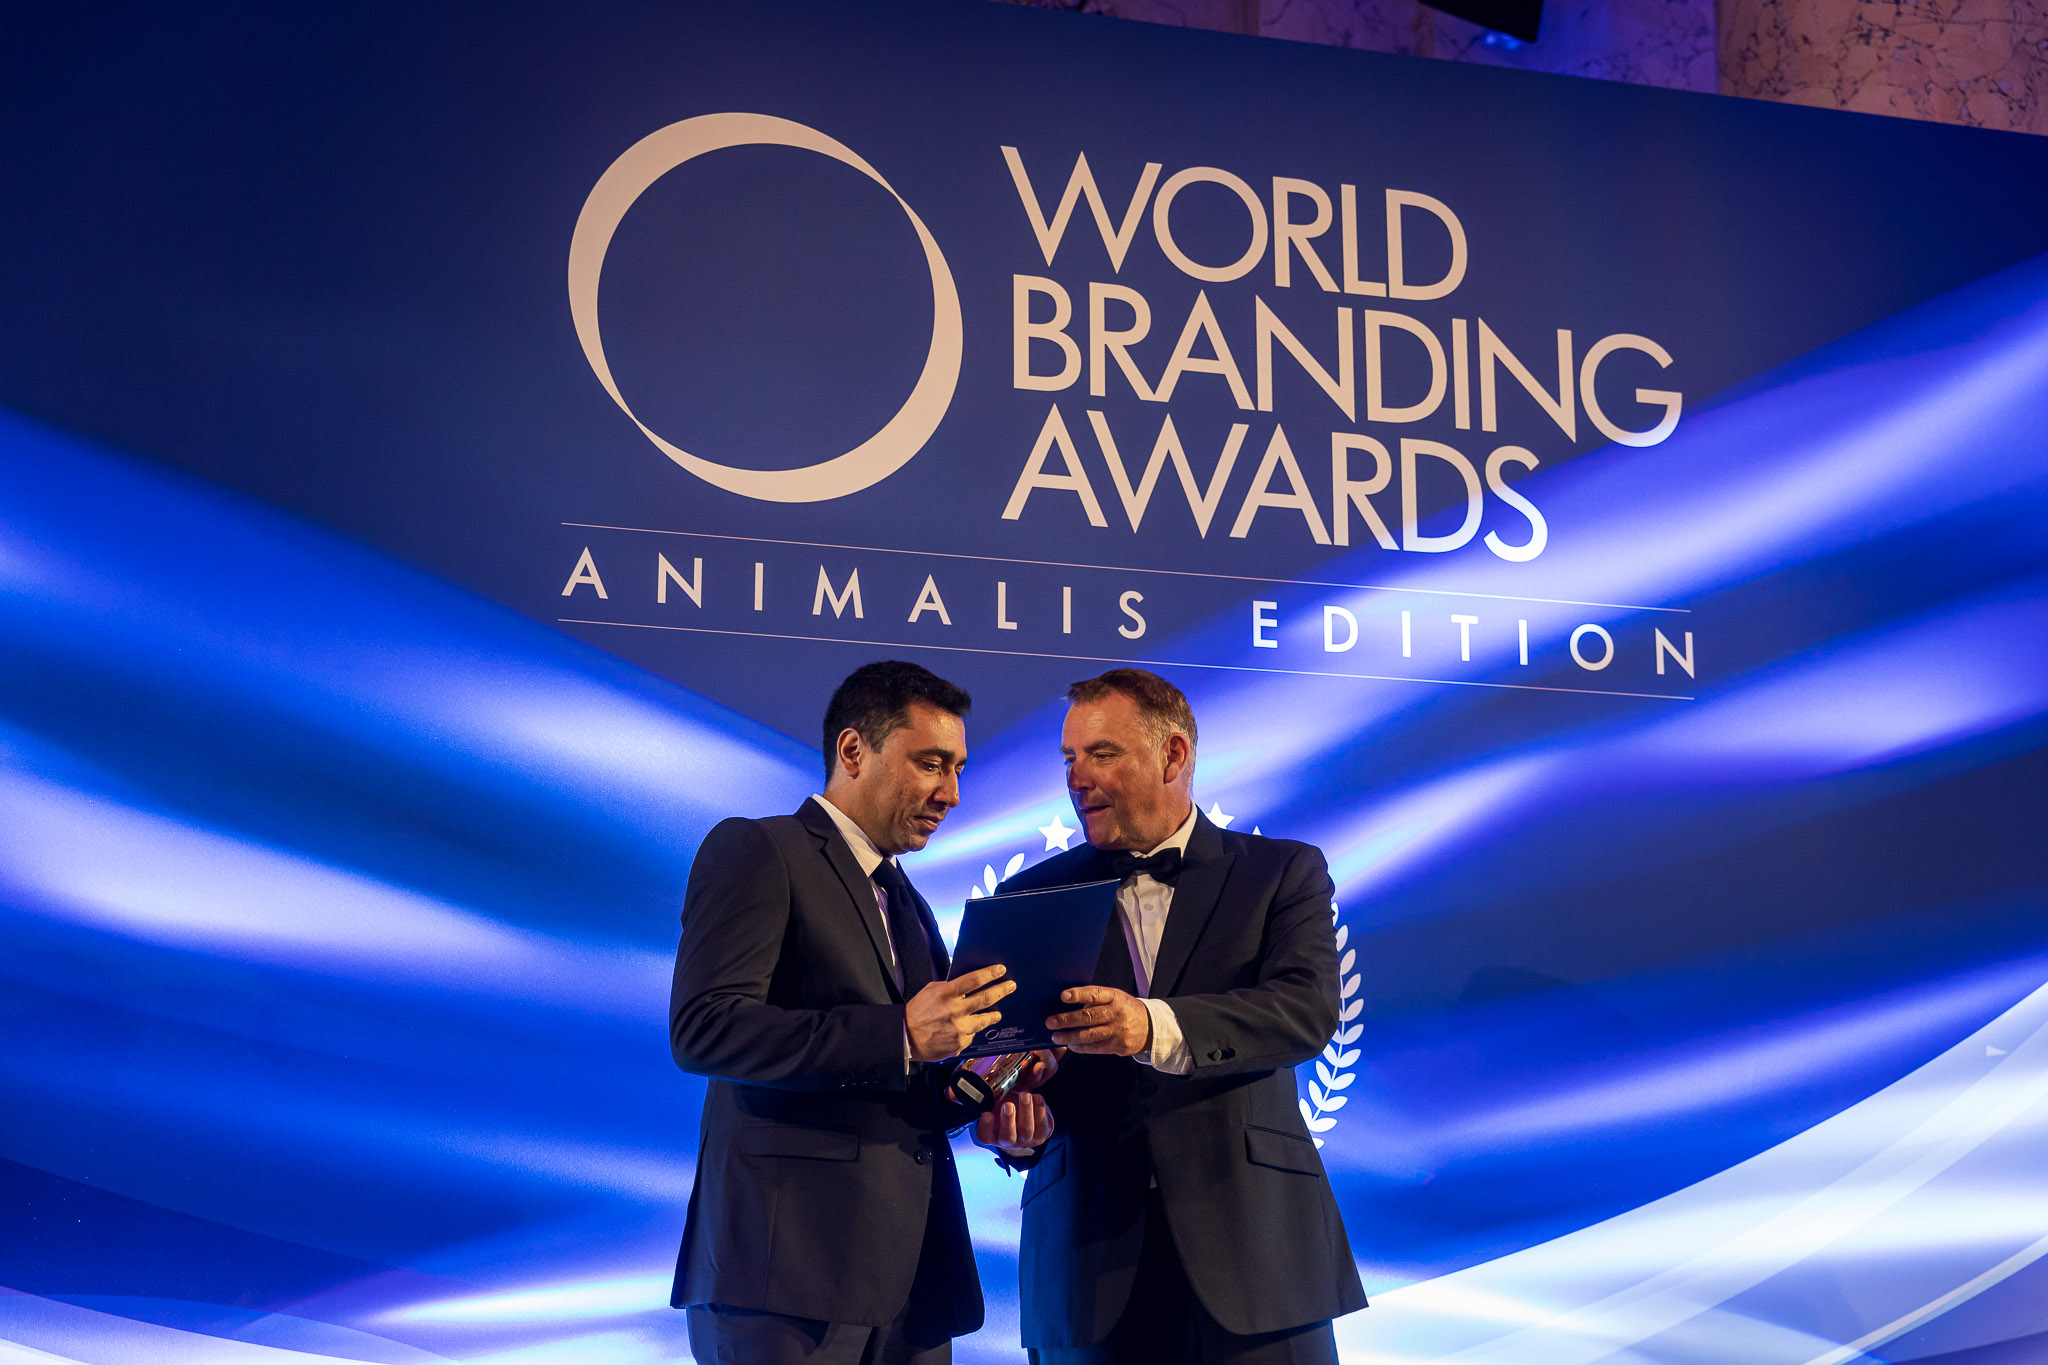 20190703_205638_world_branding_awards_animalis_5739